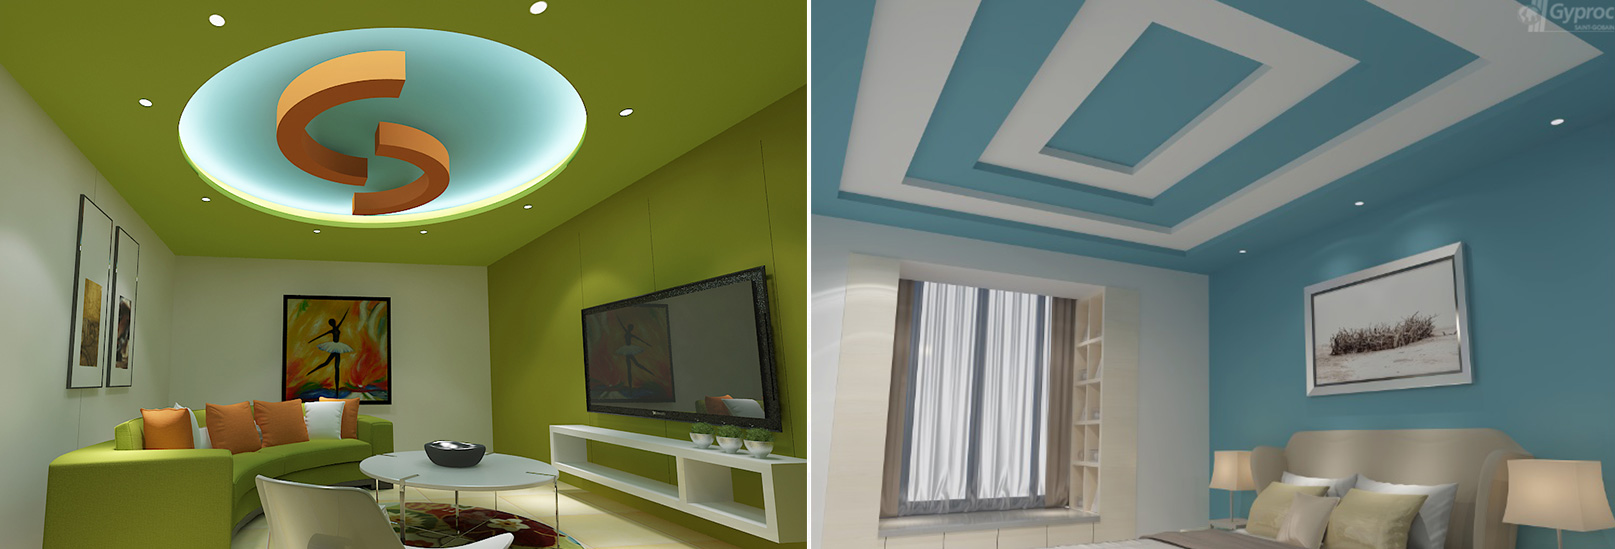 Modern Living Room False Ceiling Designs - Saint-Gobain Gyproc